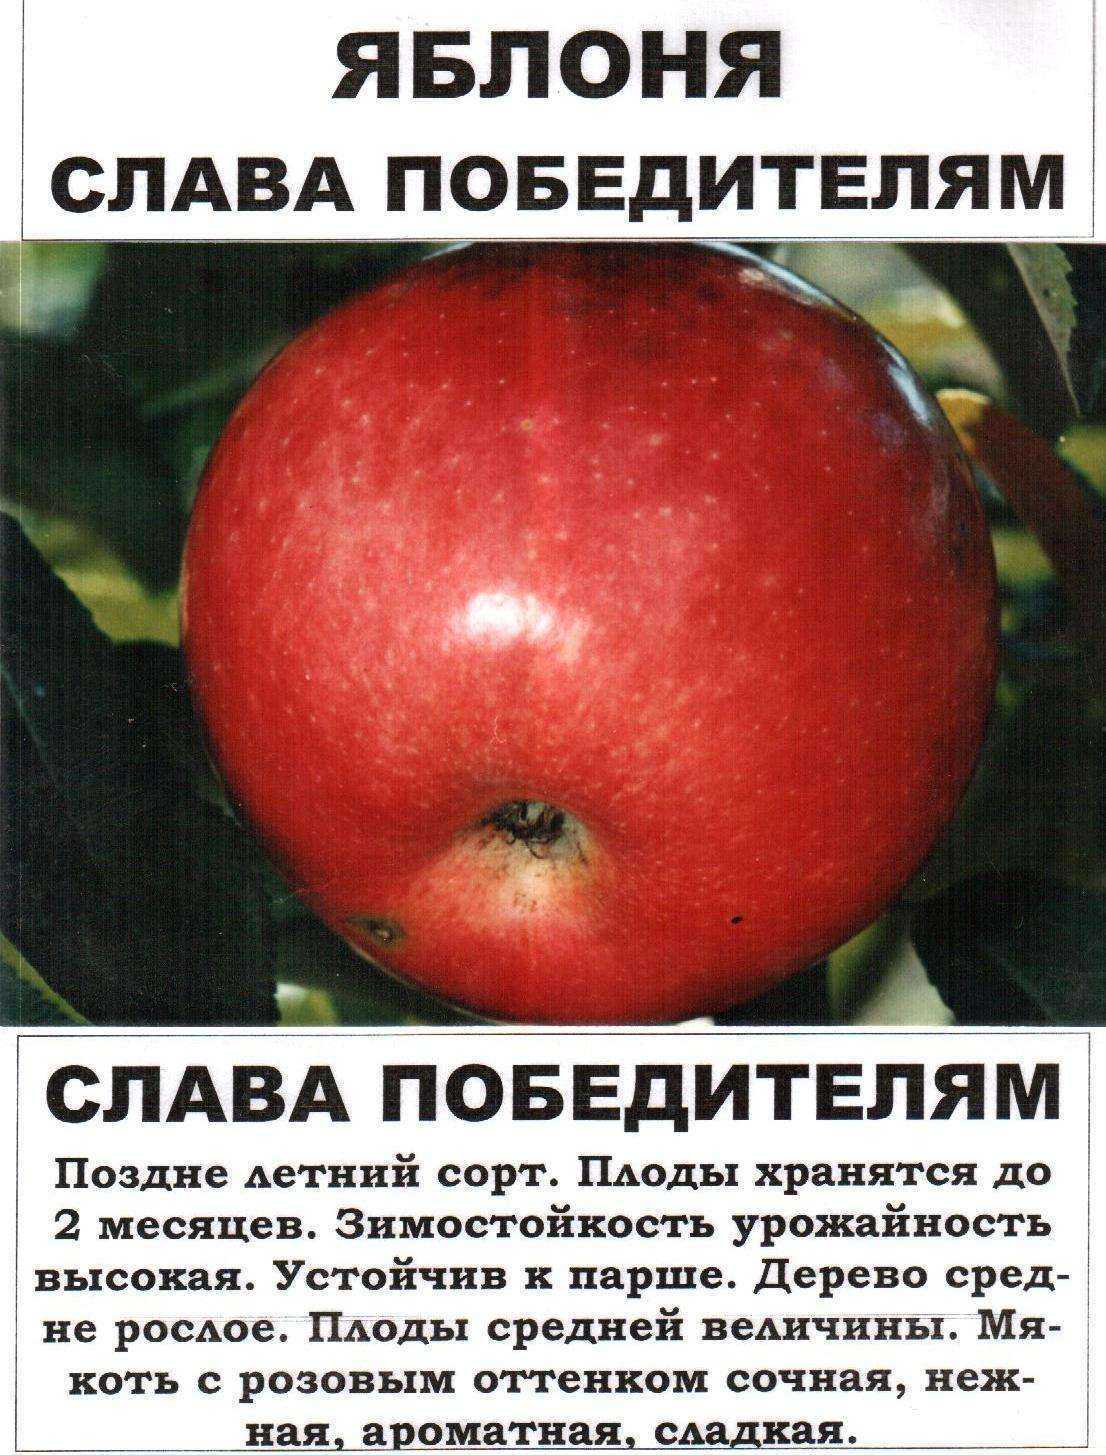 сорт яблок орлик фото и описание